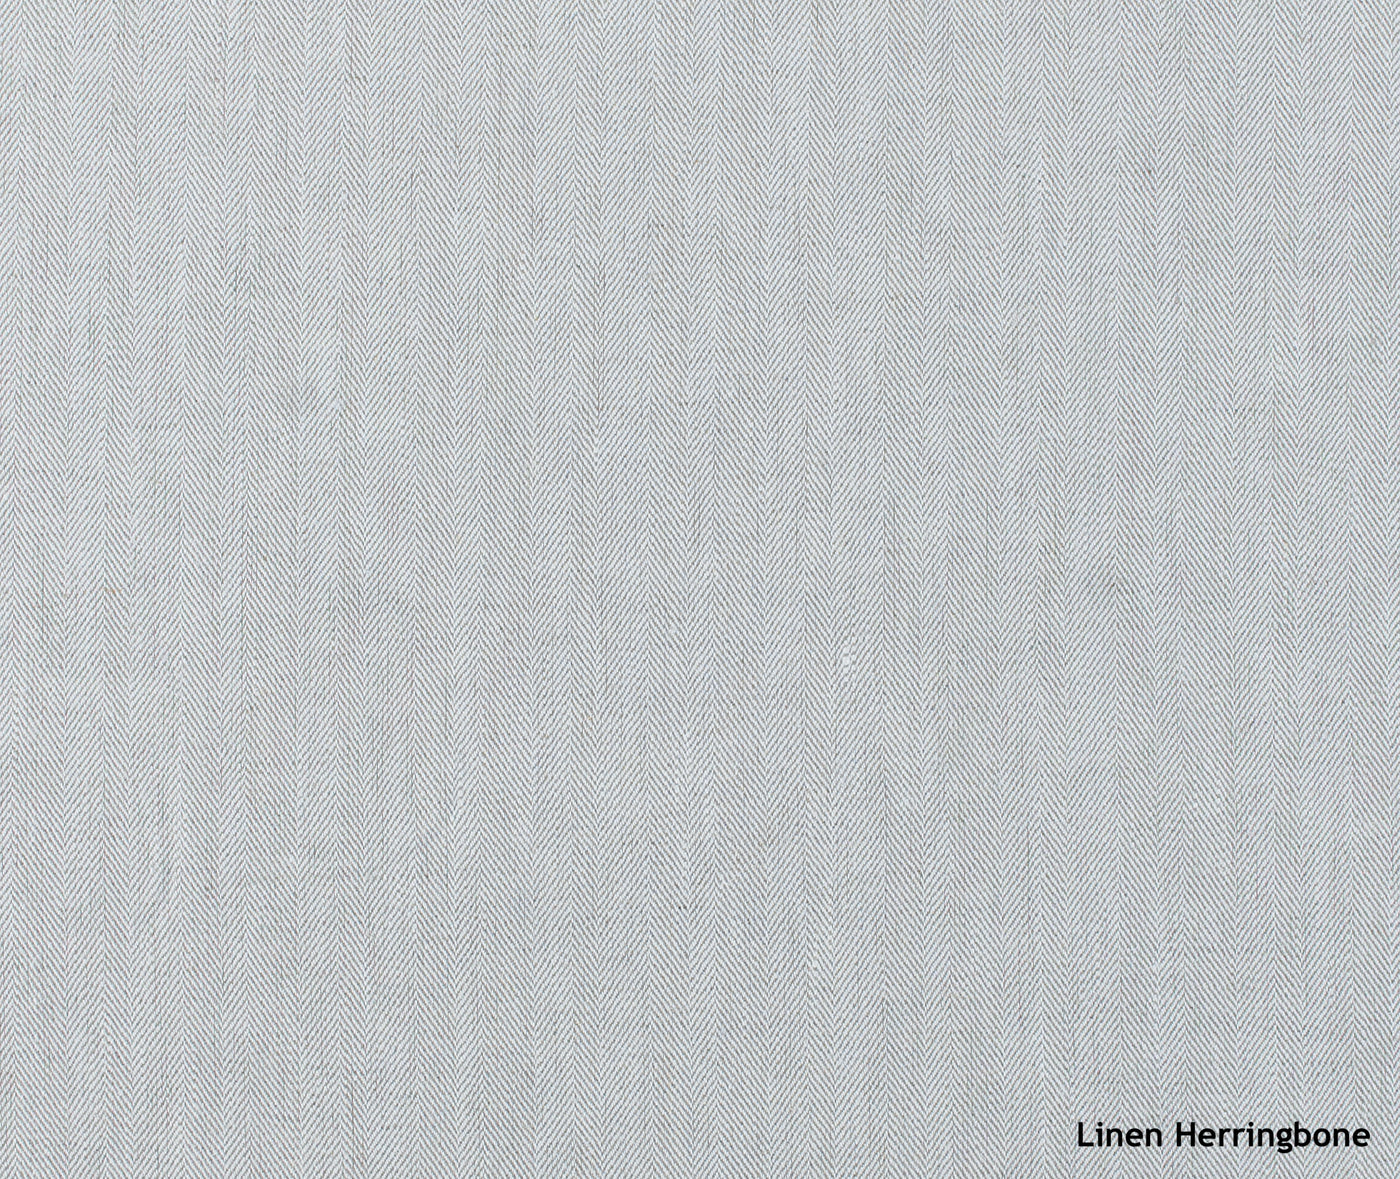 Linen Herringbone Sample